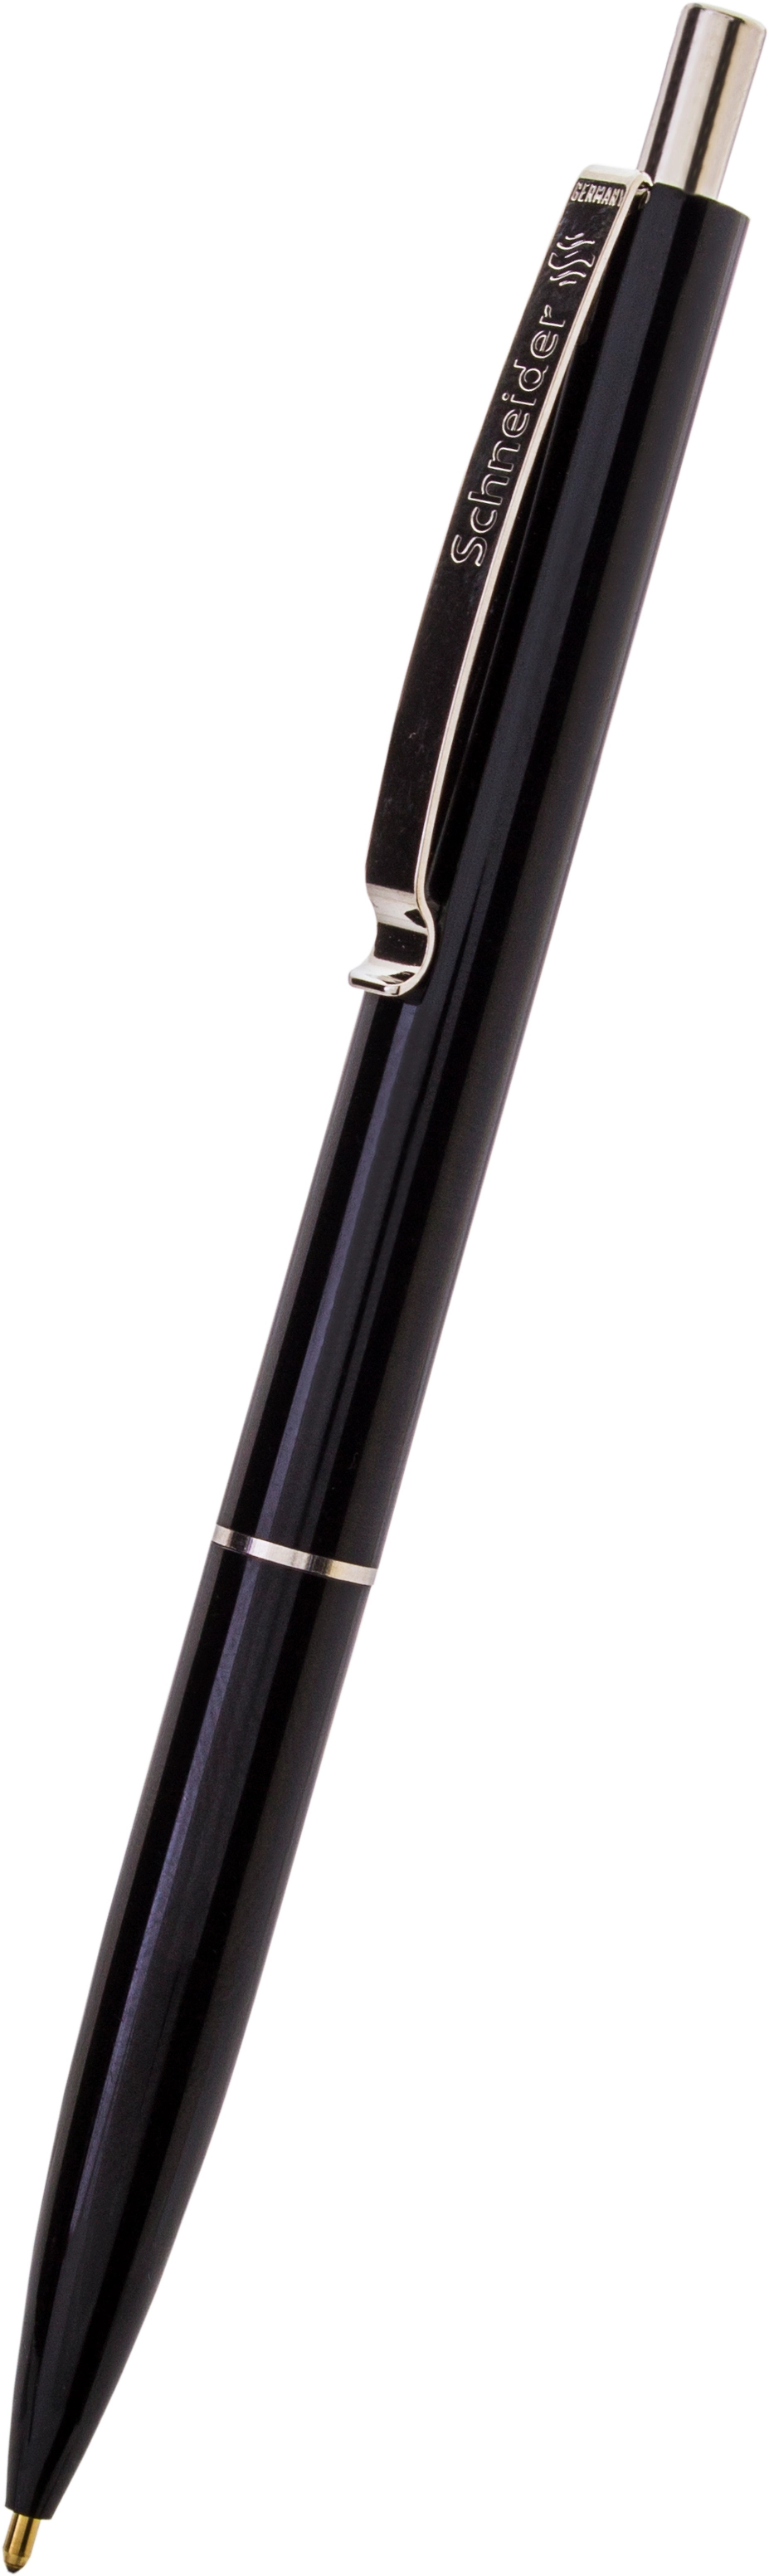 Ручка кулькова автоматична К-15 Schneider корпус чорний